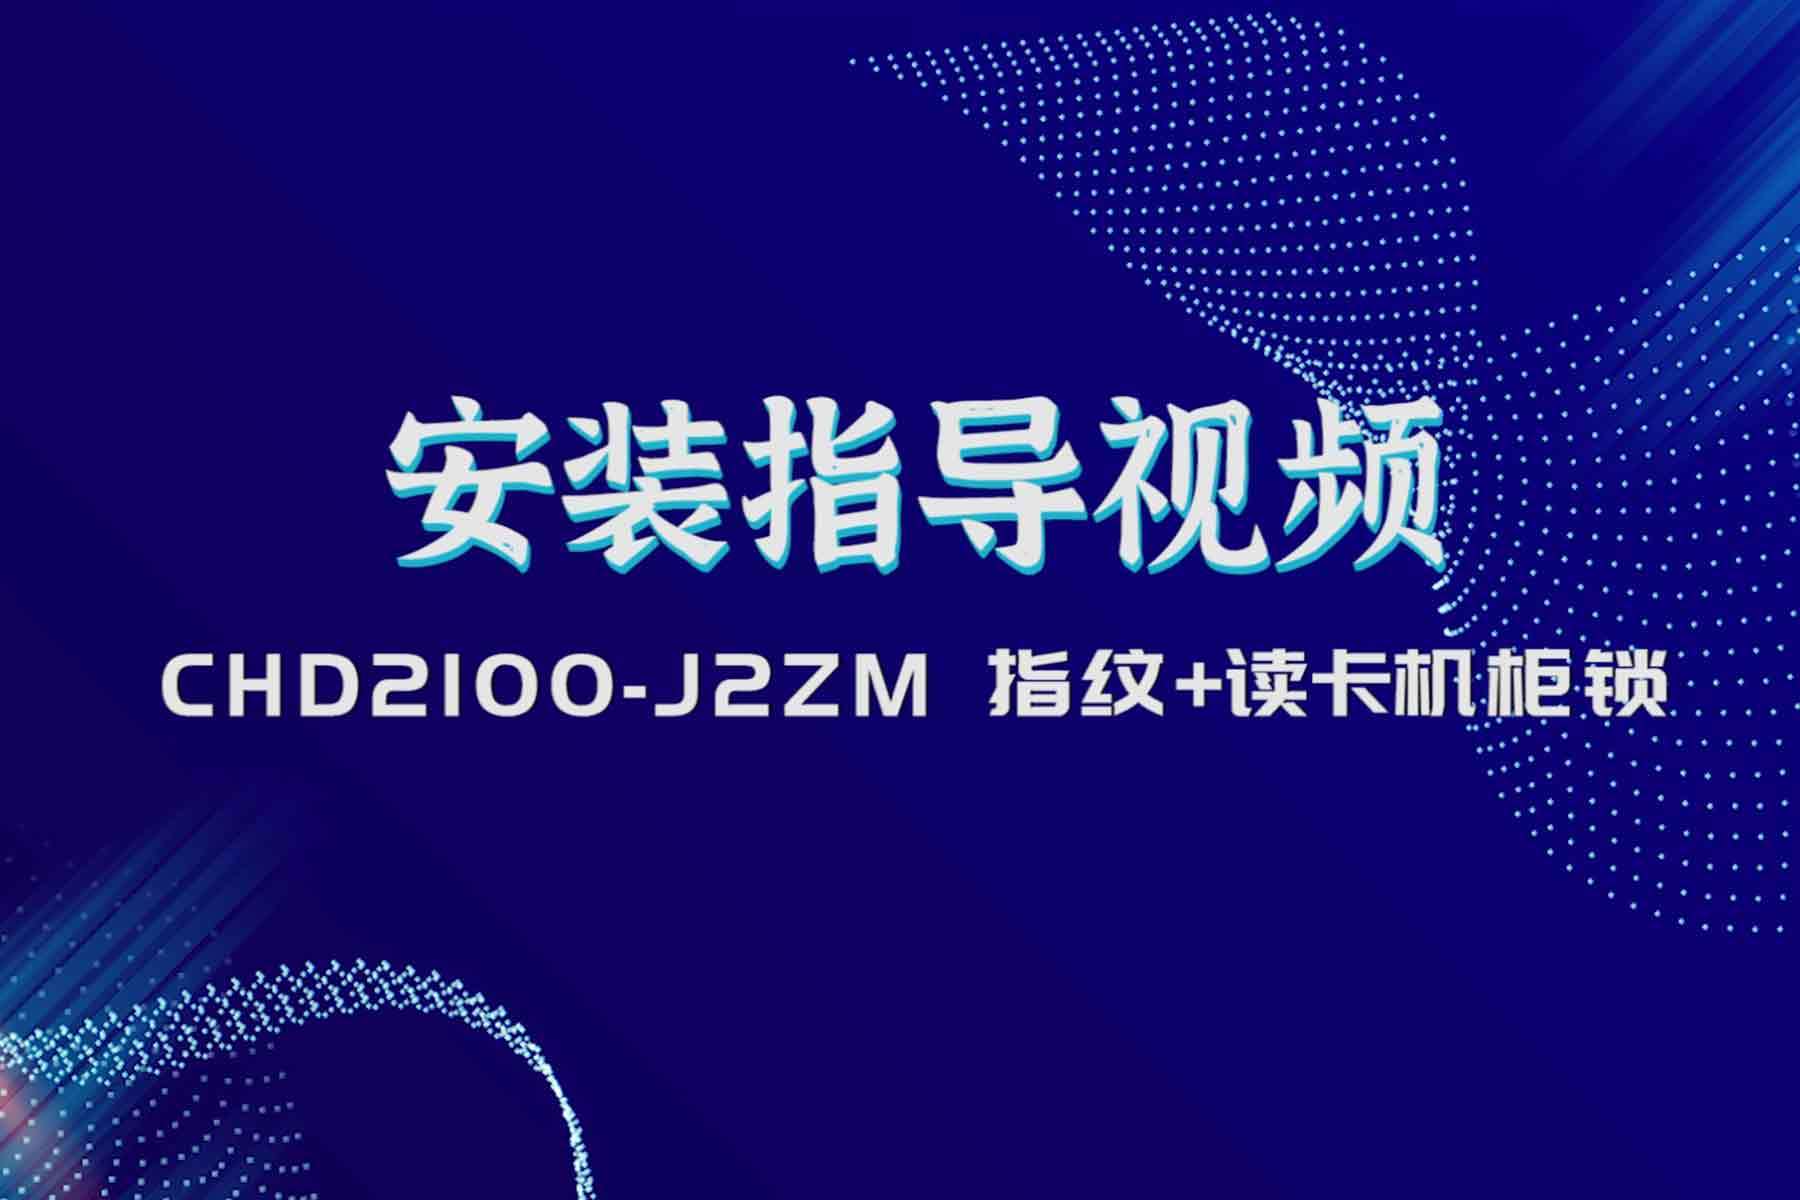 2100-J2ZM安裝指導視頻